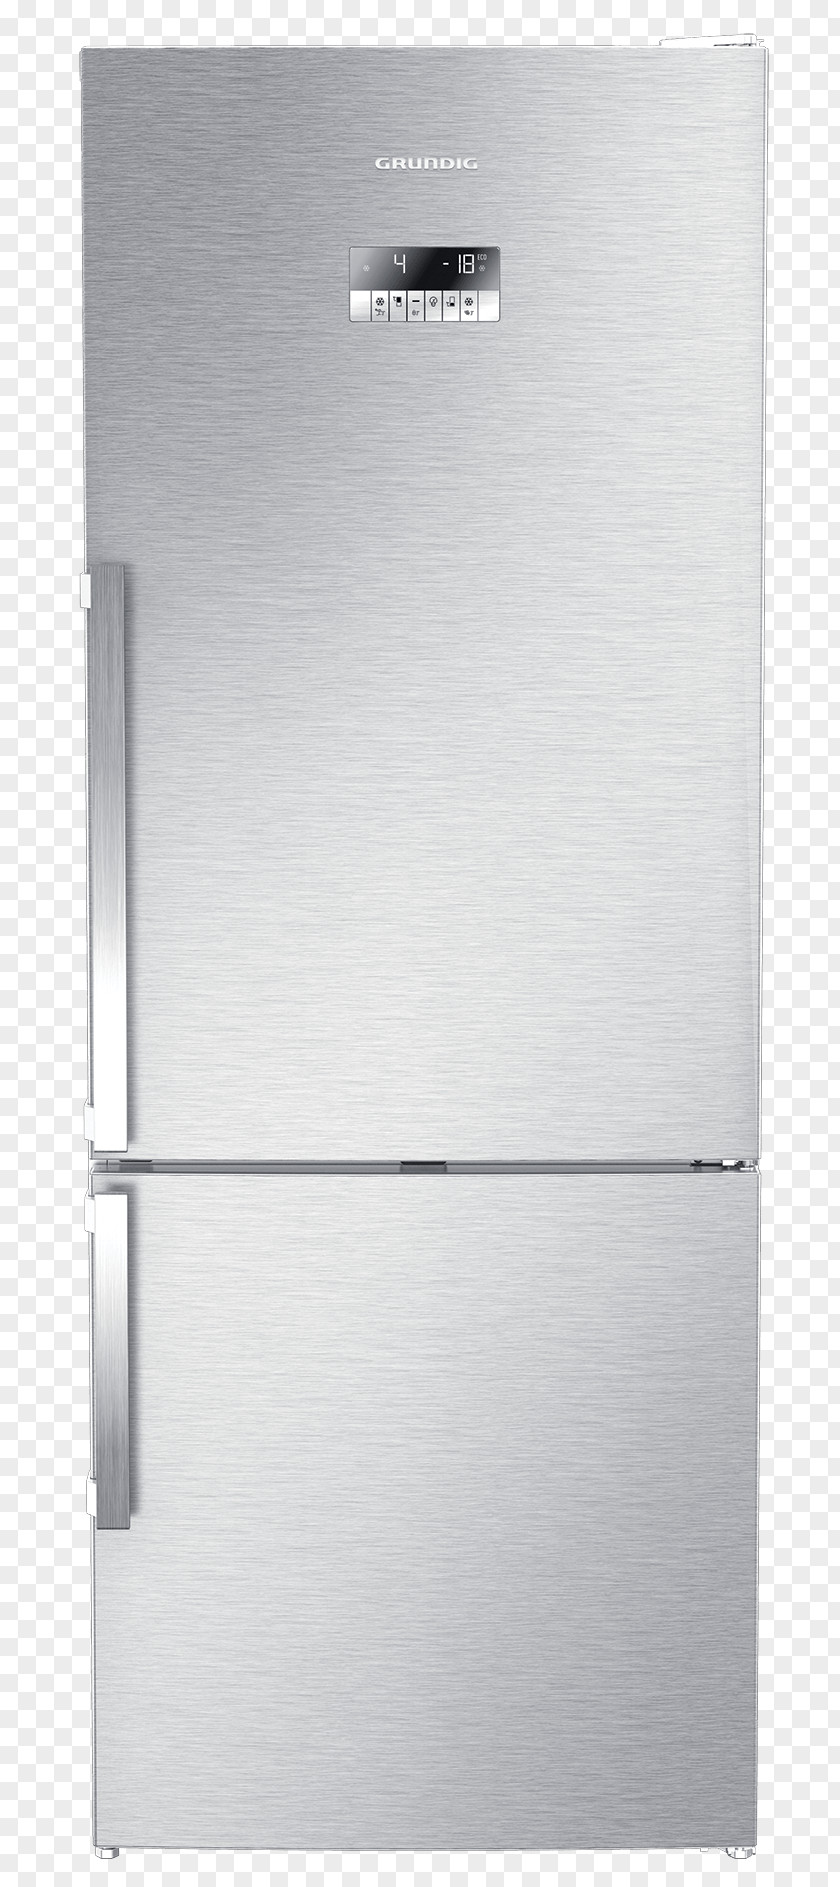 Refrigerator GKN16220 Auto-defrost GRUNDIG Grundig GSBS 14620 XWF GWN 21210 X PNG